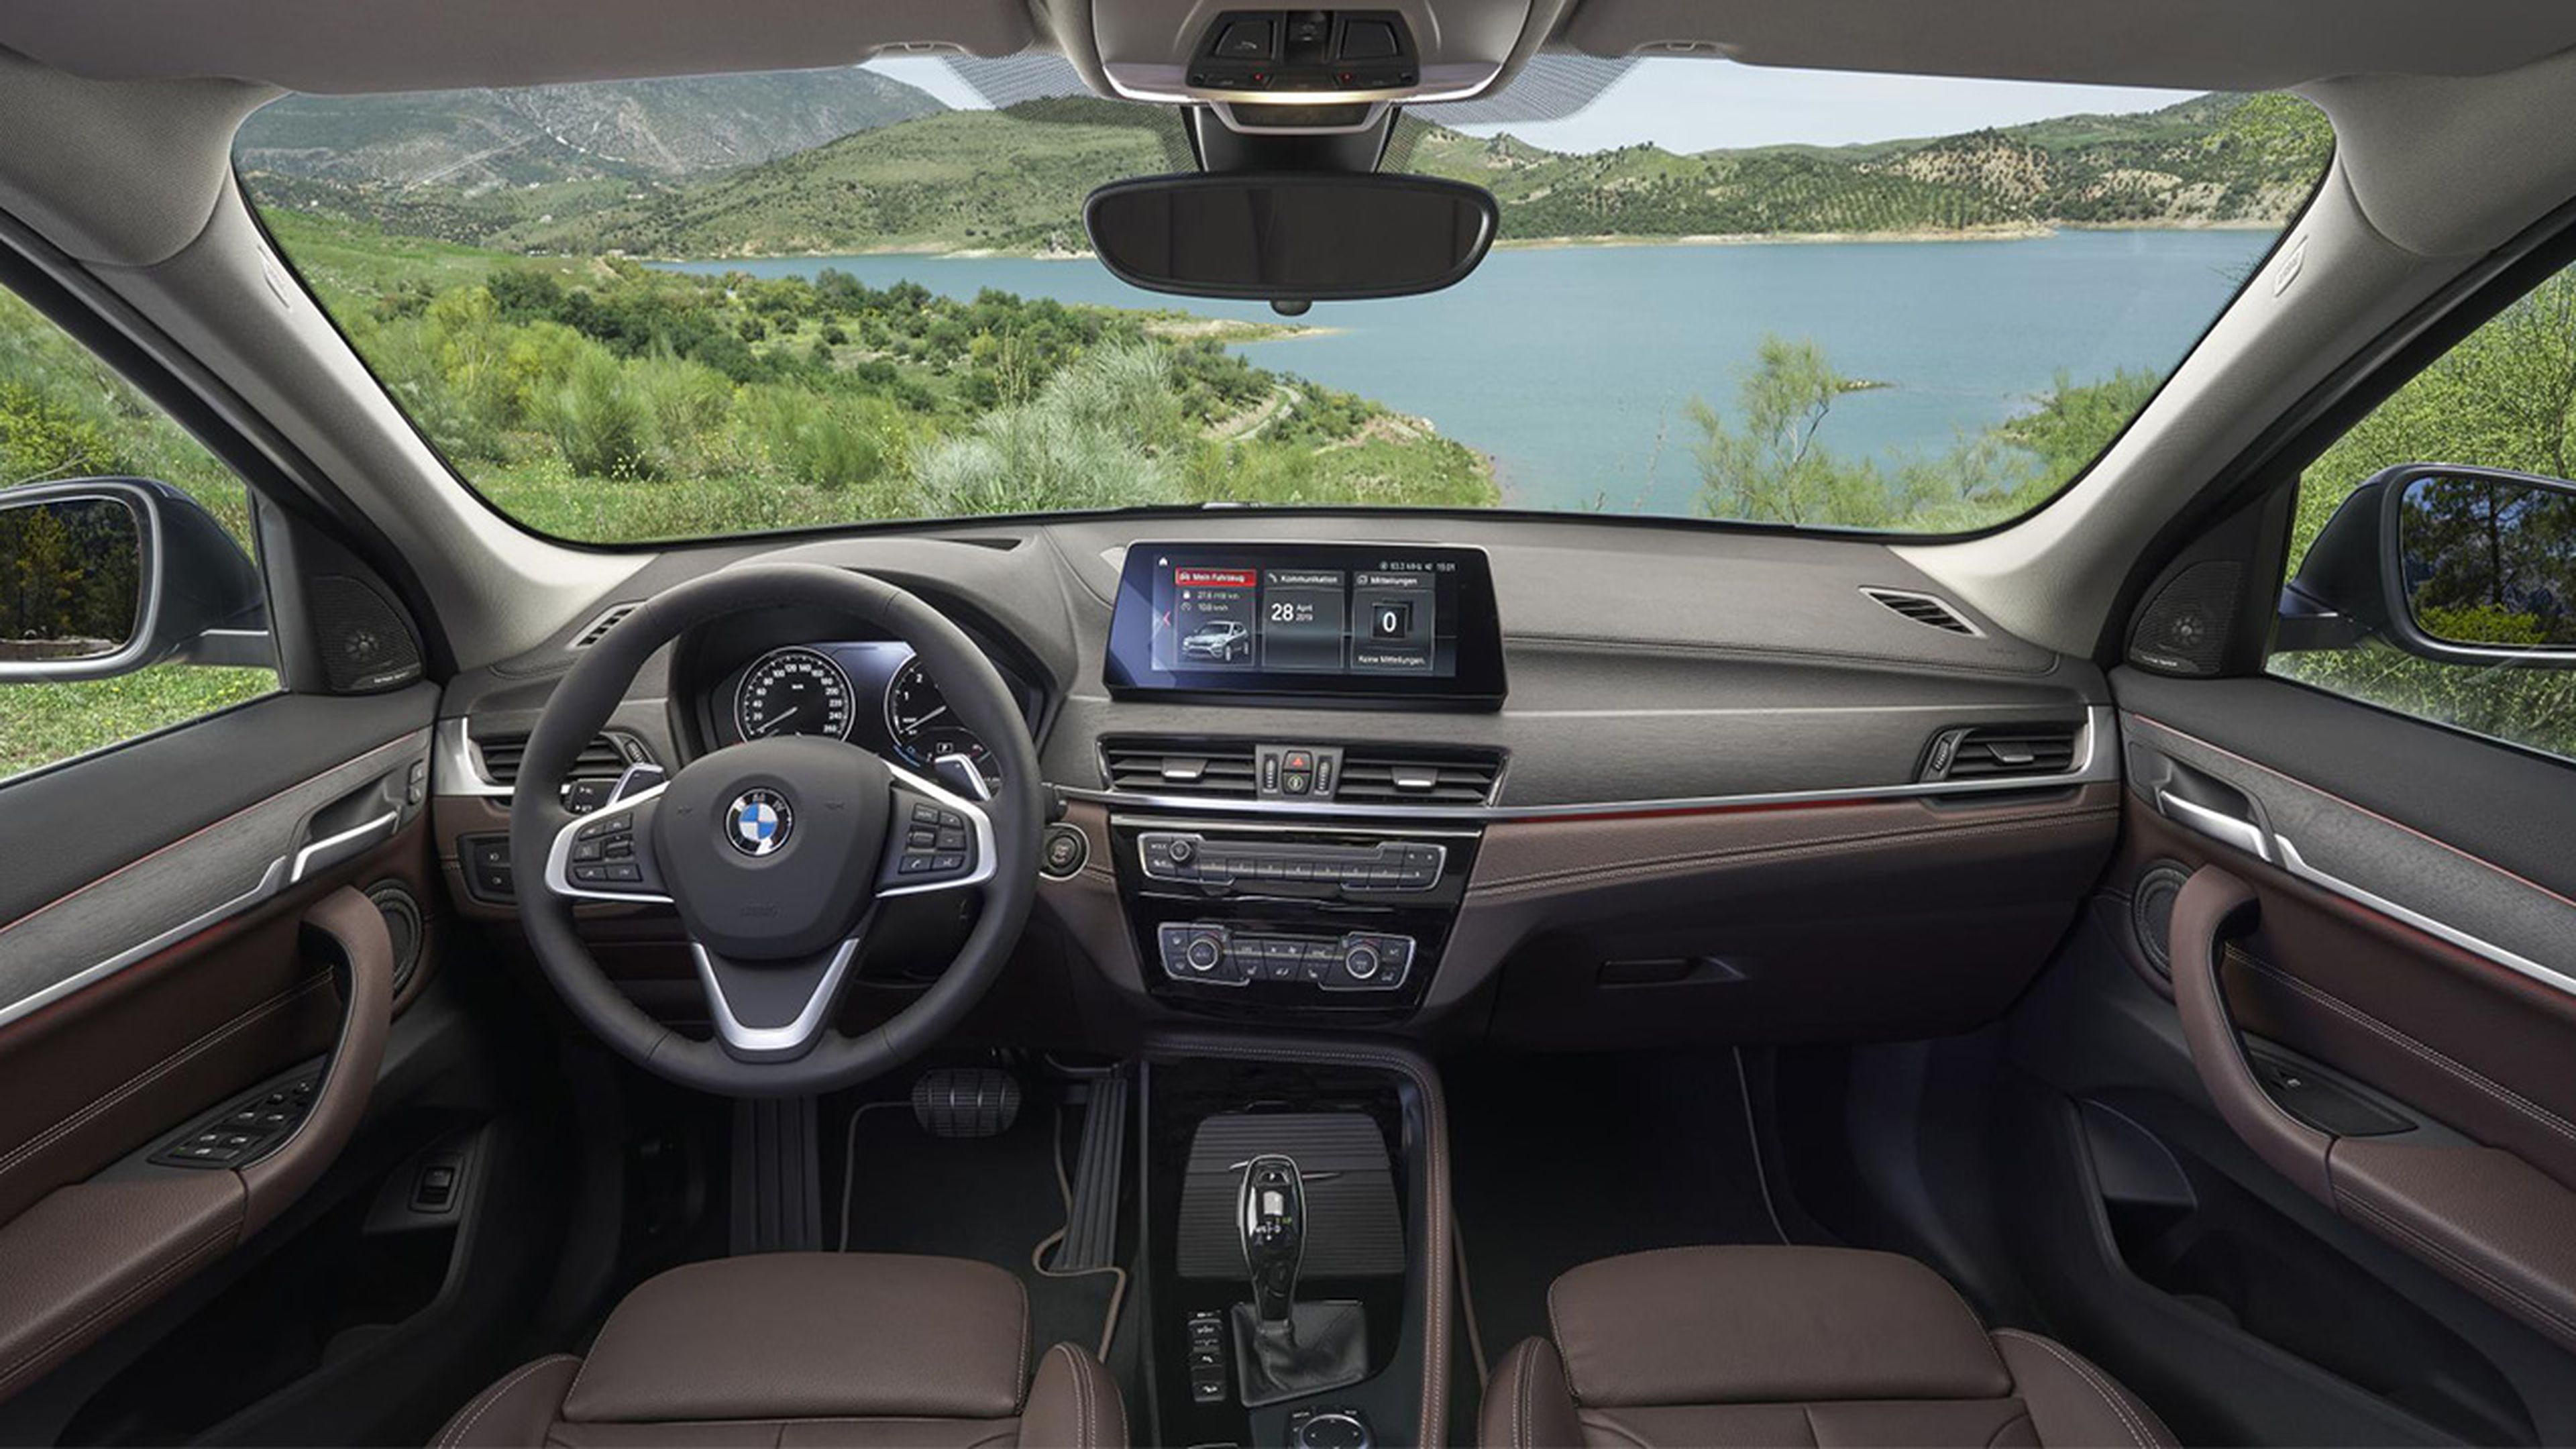 BMW X1 2020 interior